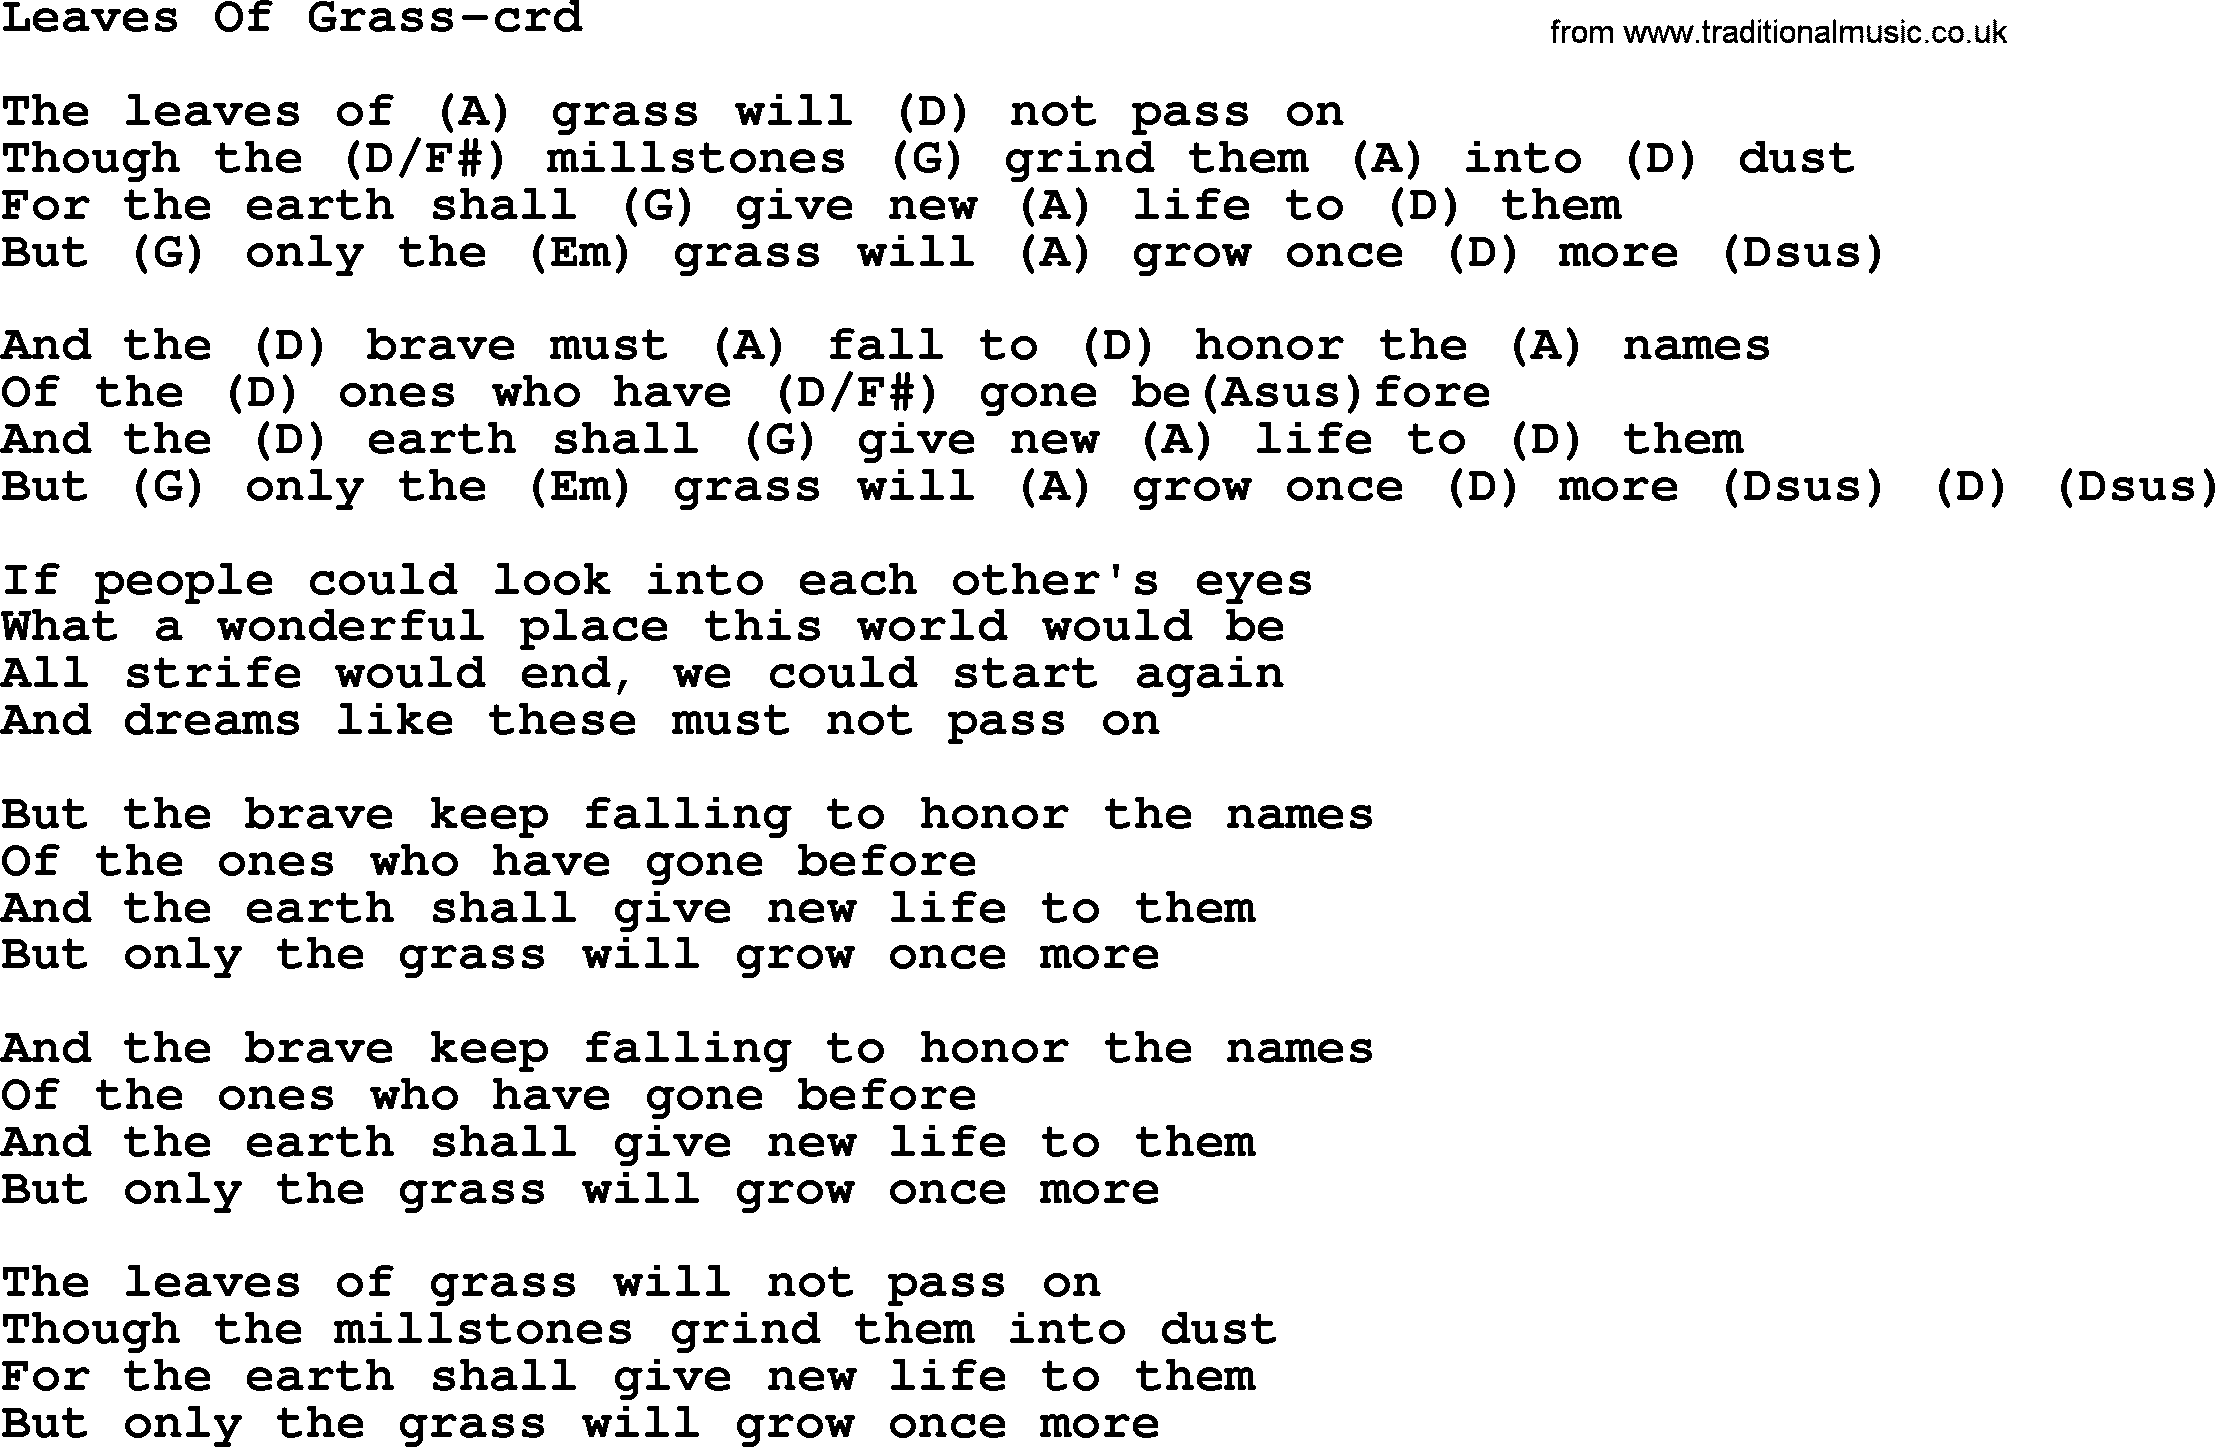 Gordon Lightfoot song Leaves Of Grass, lyrics and chords